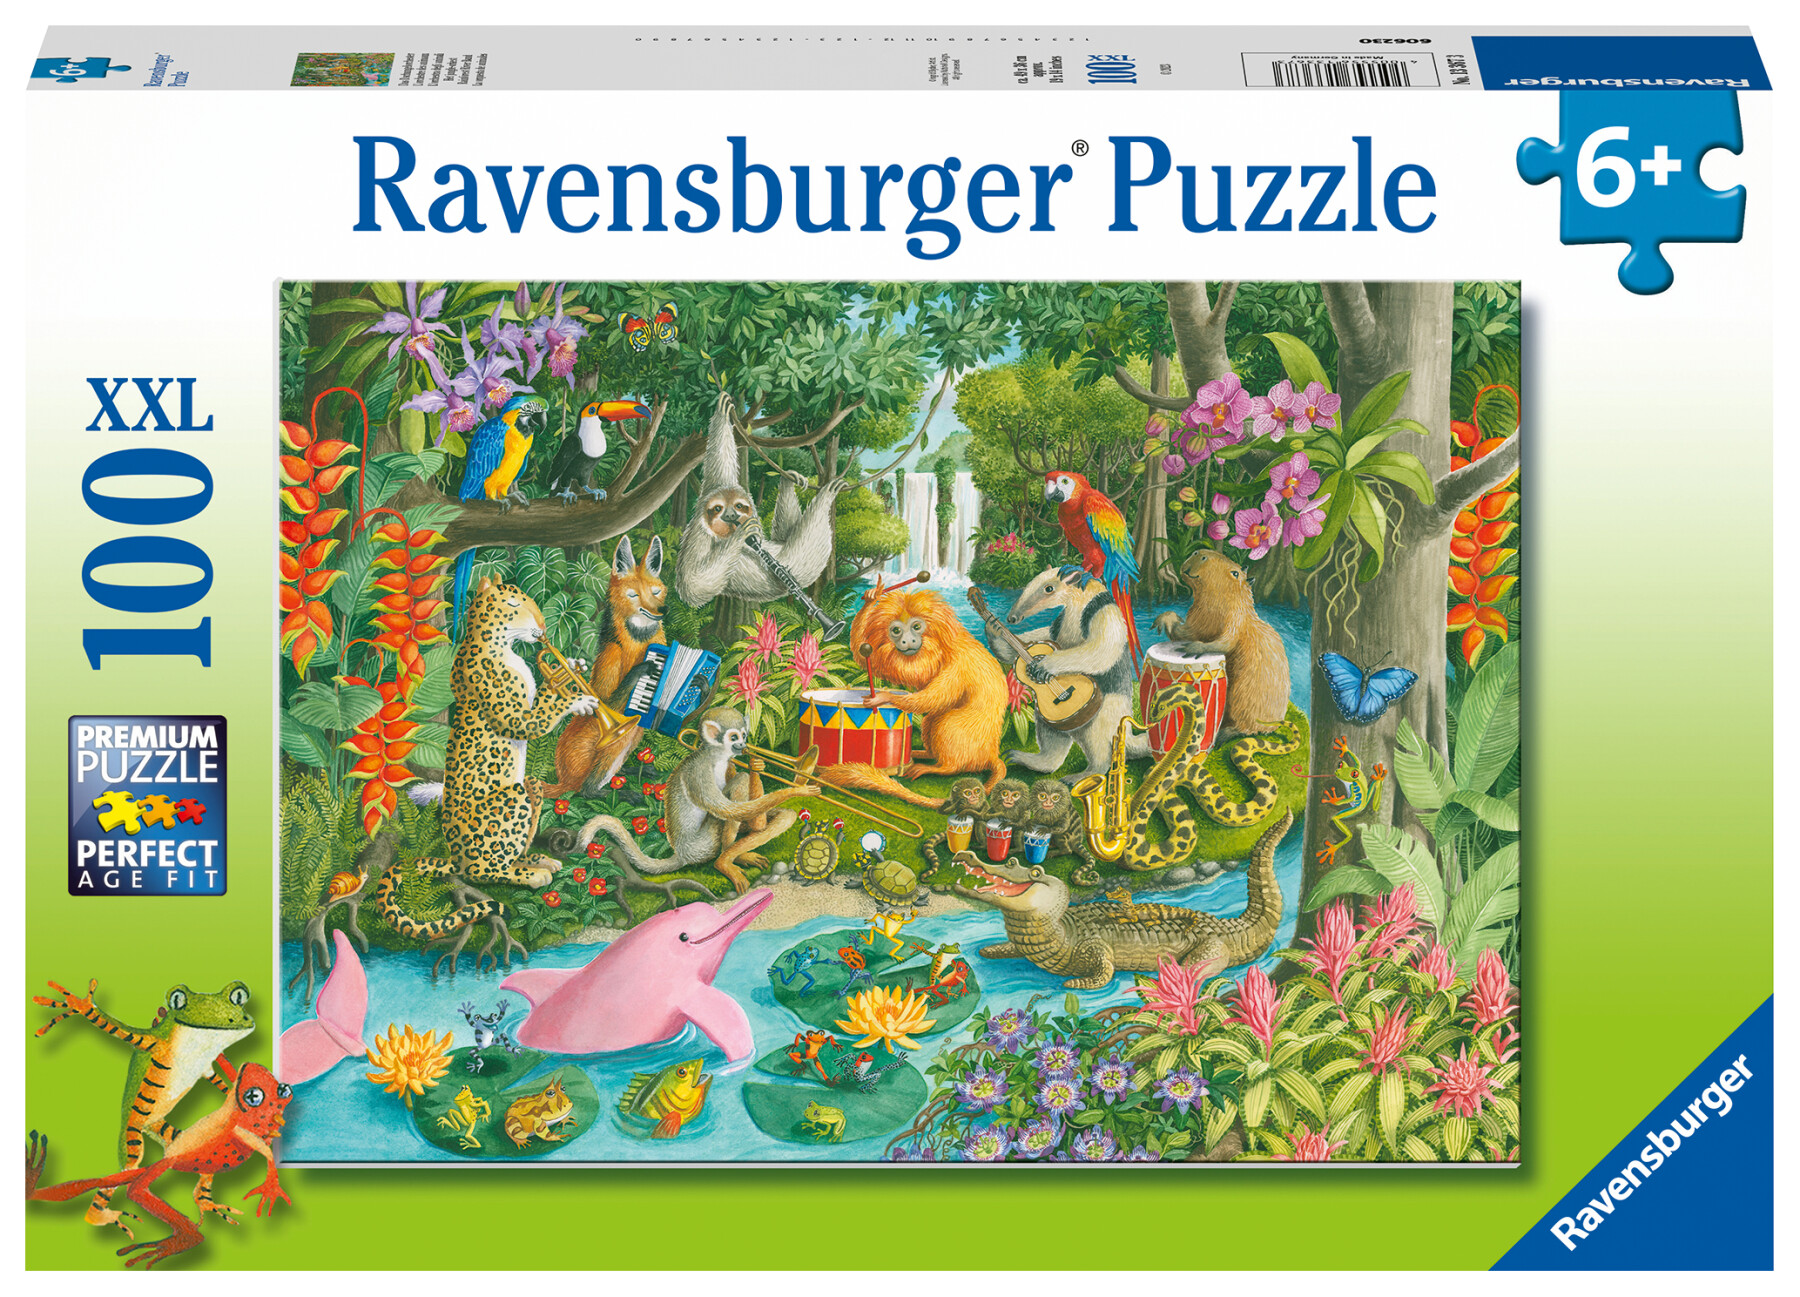 Ravensburger - puzzle l'orchestra degli animali, 100 pezzi xxl, età raccomandata 6+ anni - RAVENSBURGER